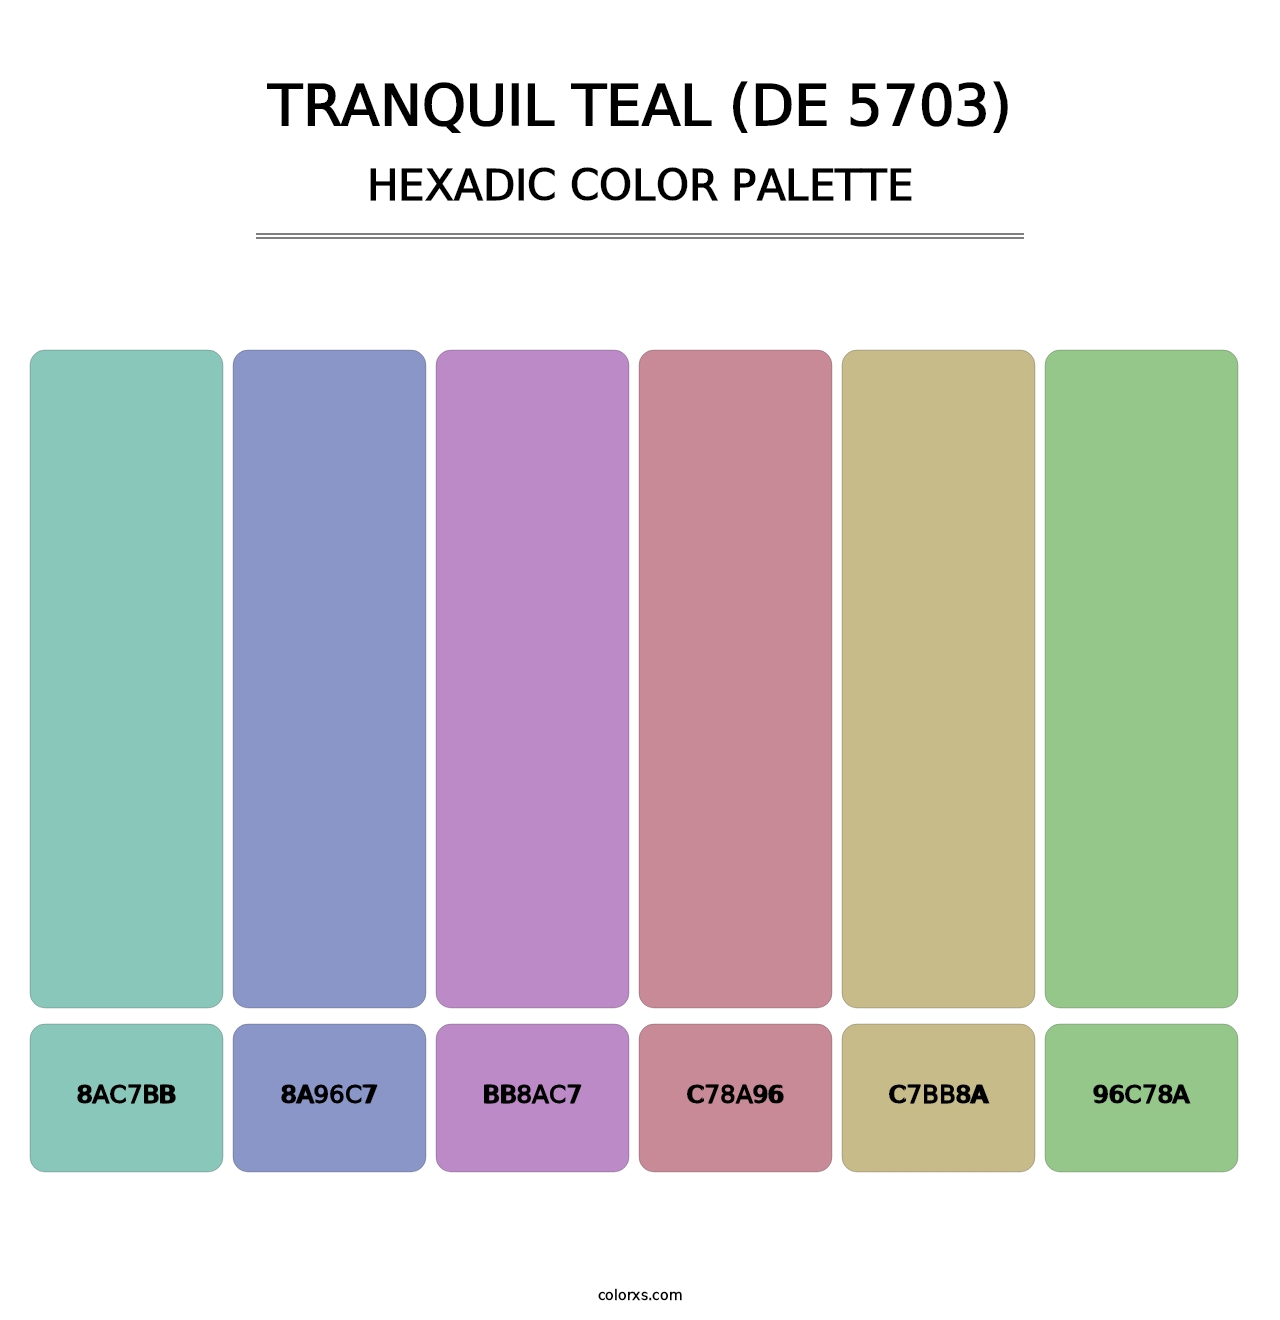 Tranquil Teal (DE 5703) - Hexadic Color Palette